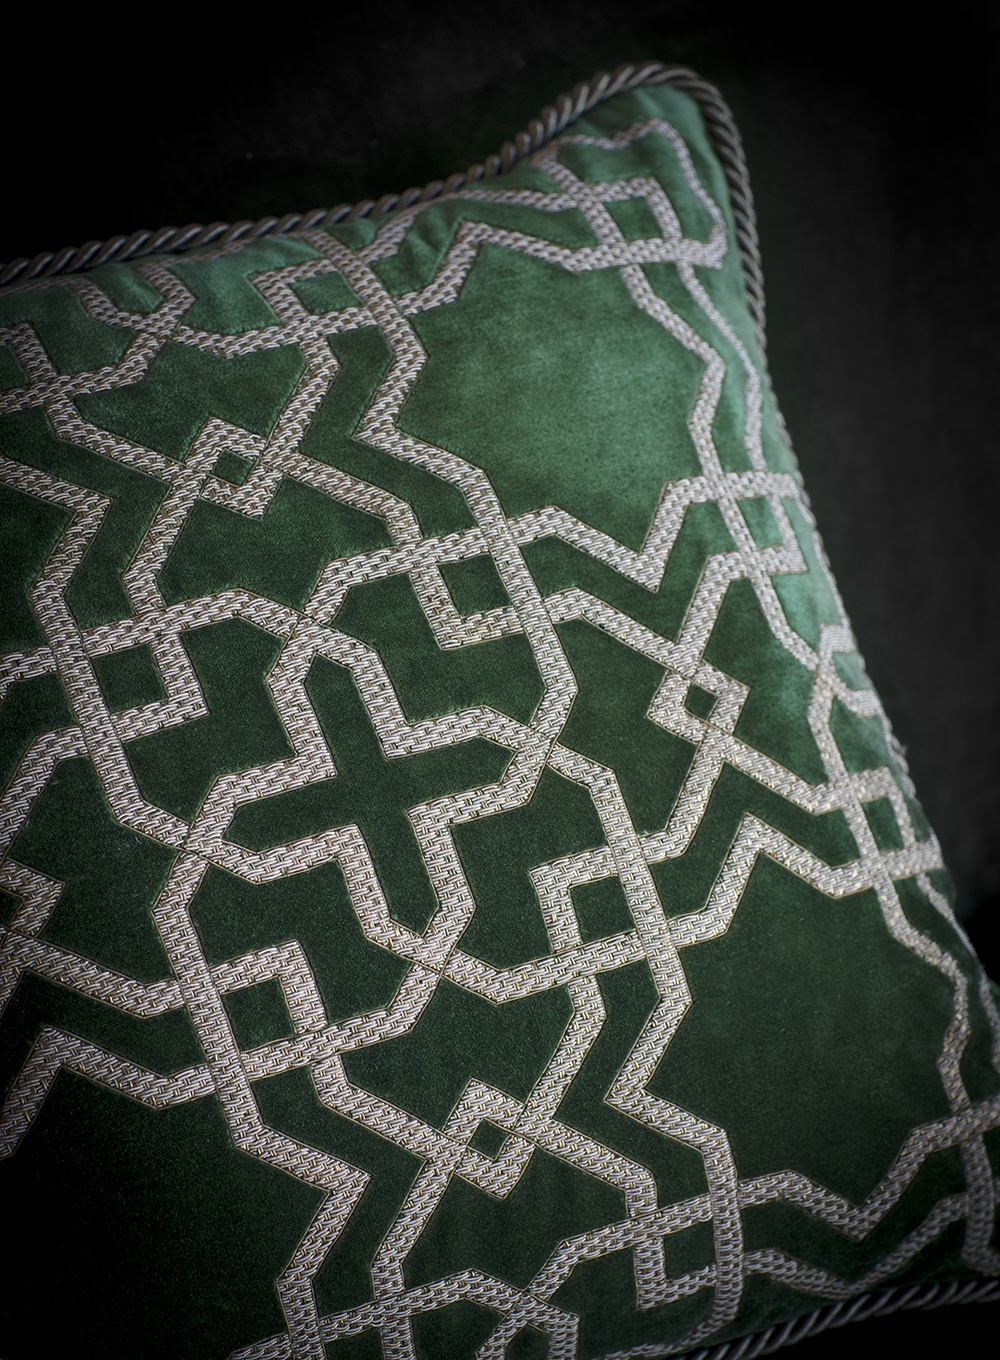 Habibi cushion in Capri silk velvet - Emerald